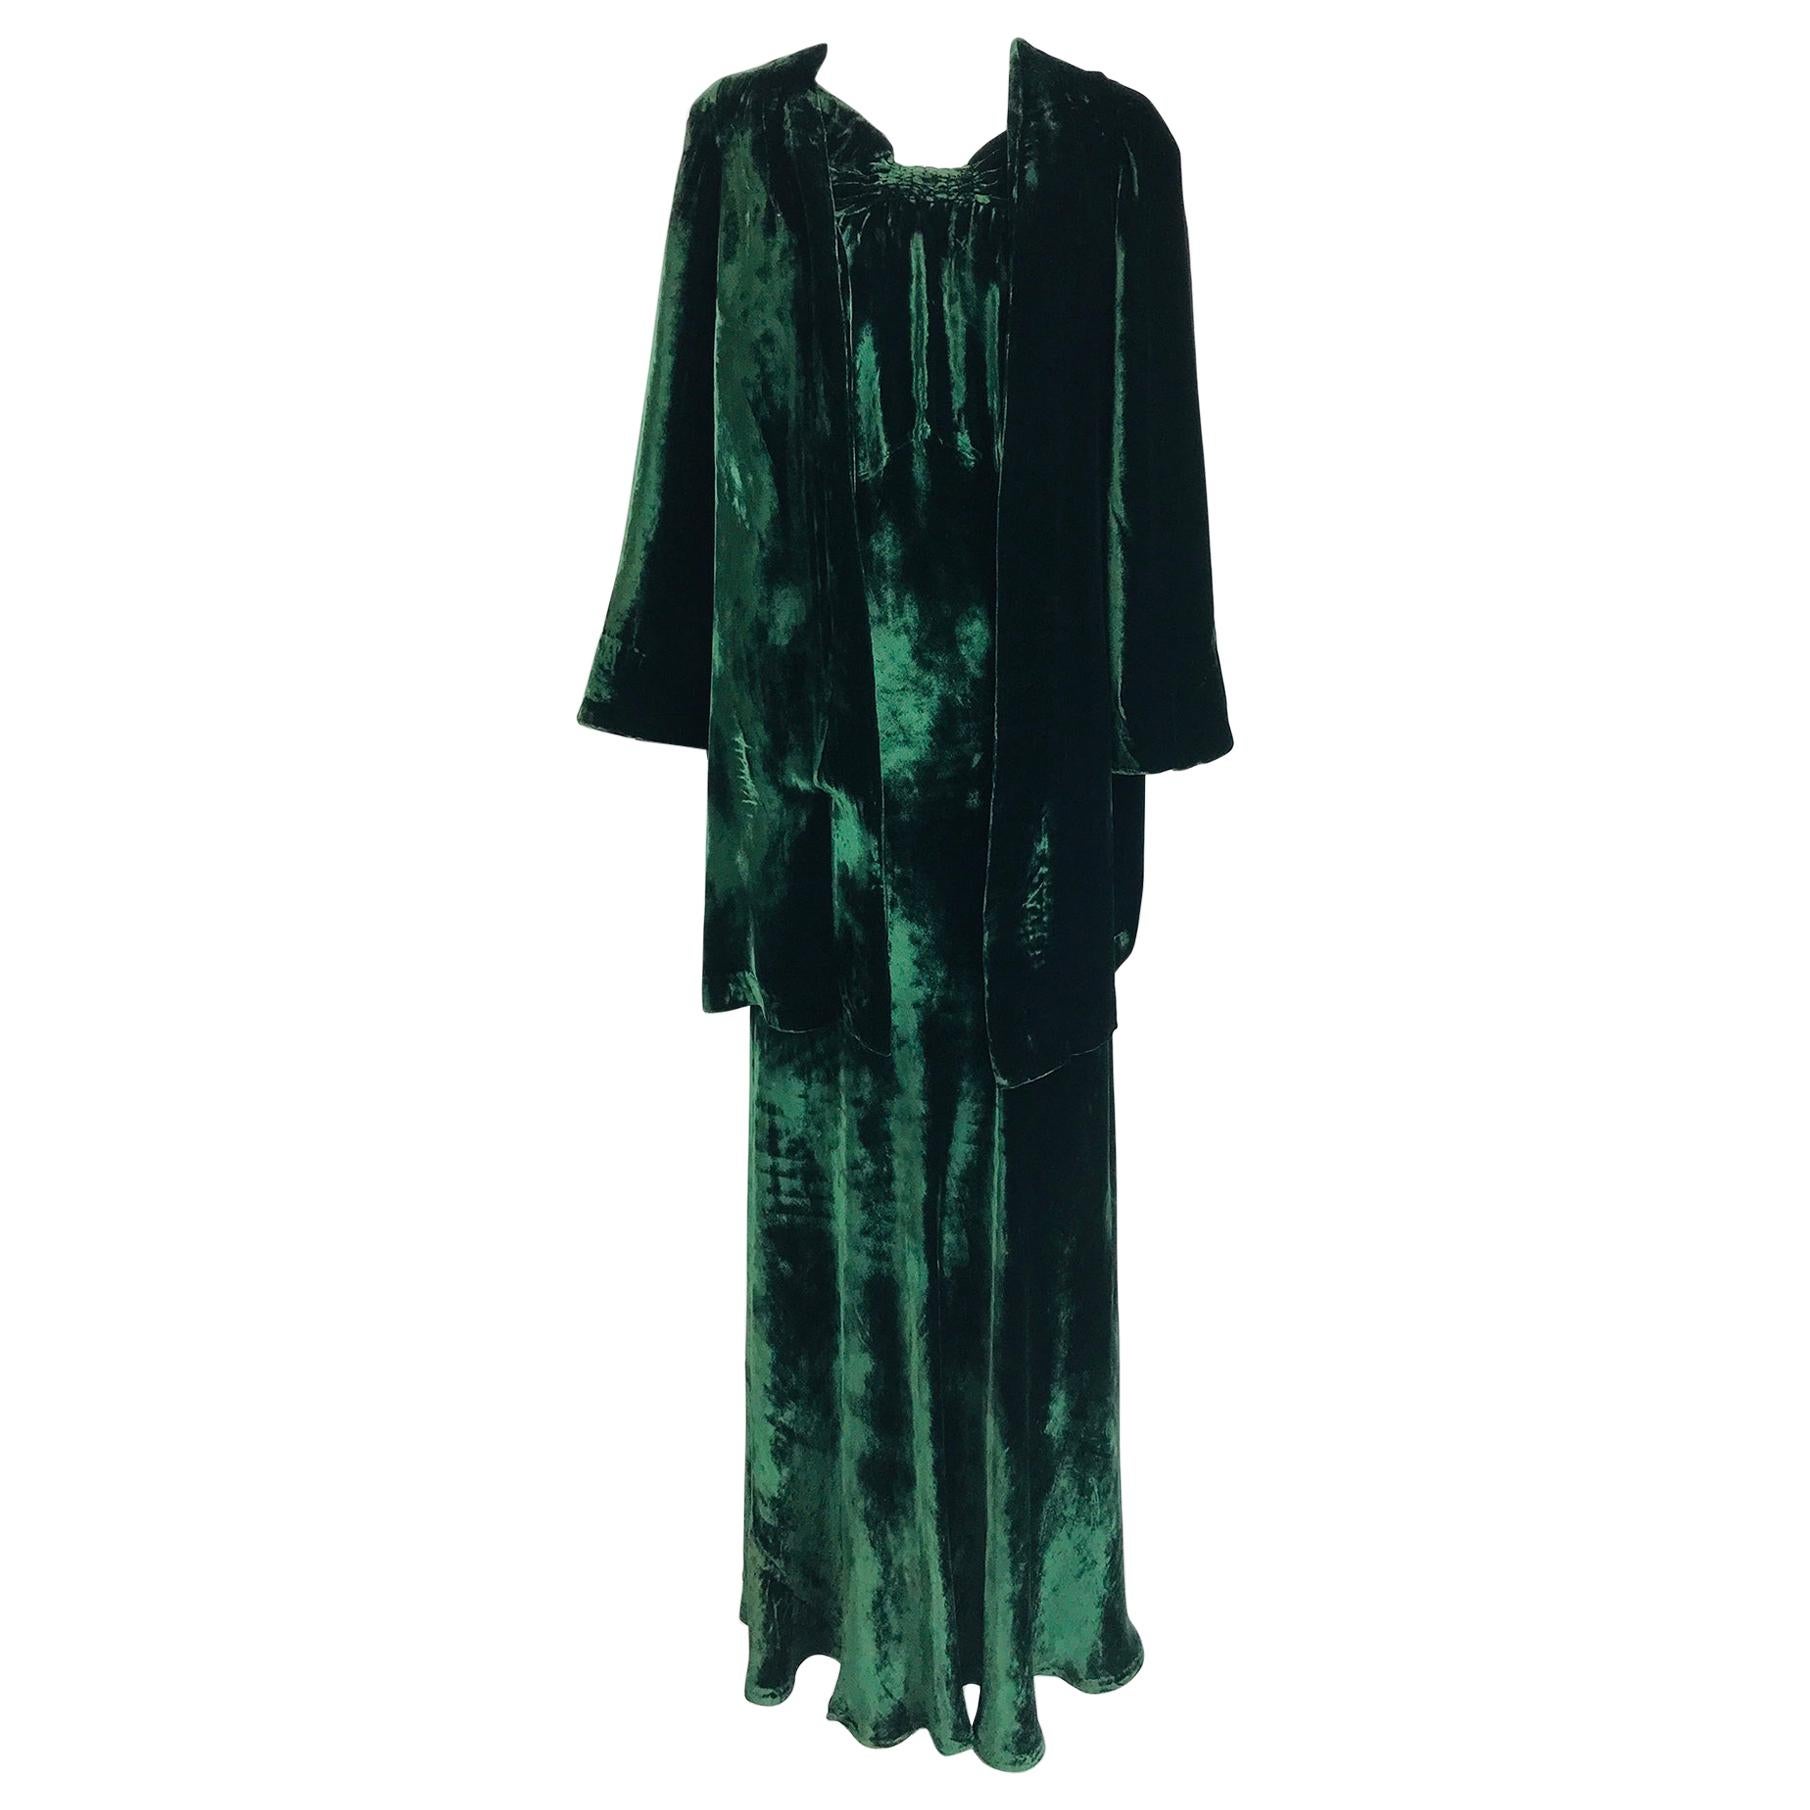 1930s Green Dress - 15 For Sale on 1stDibs